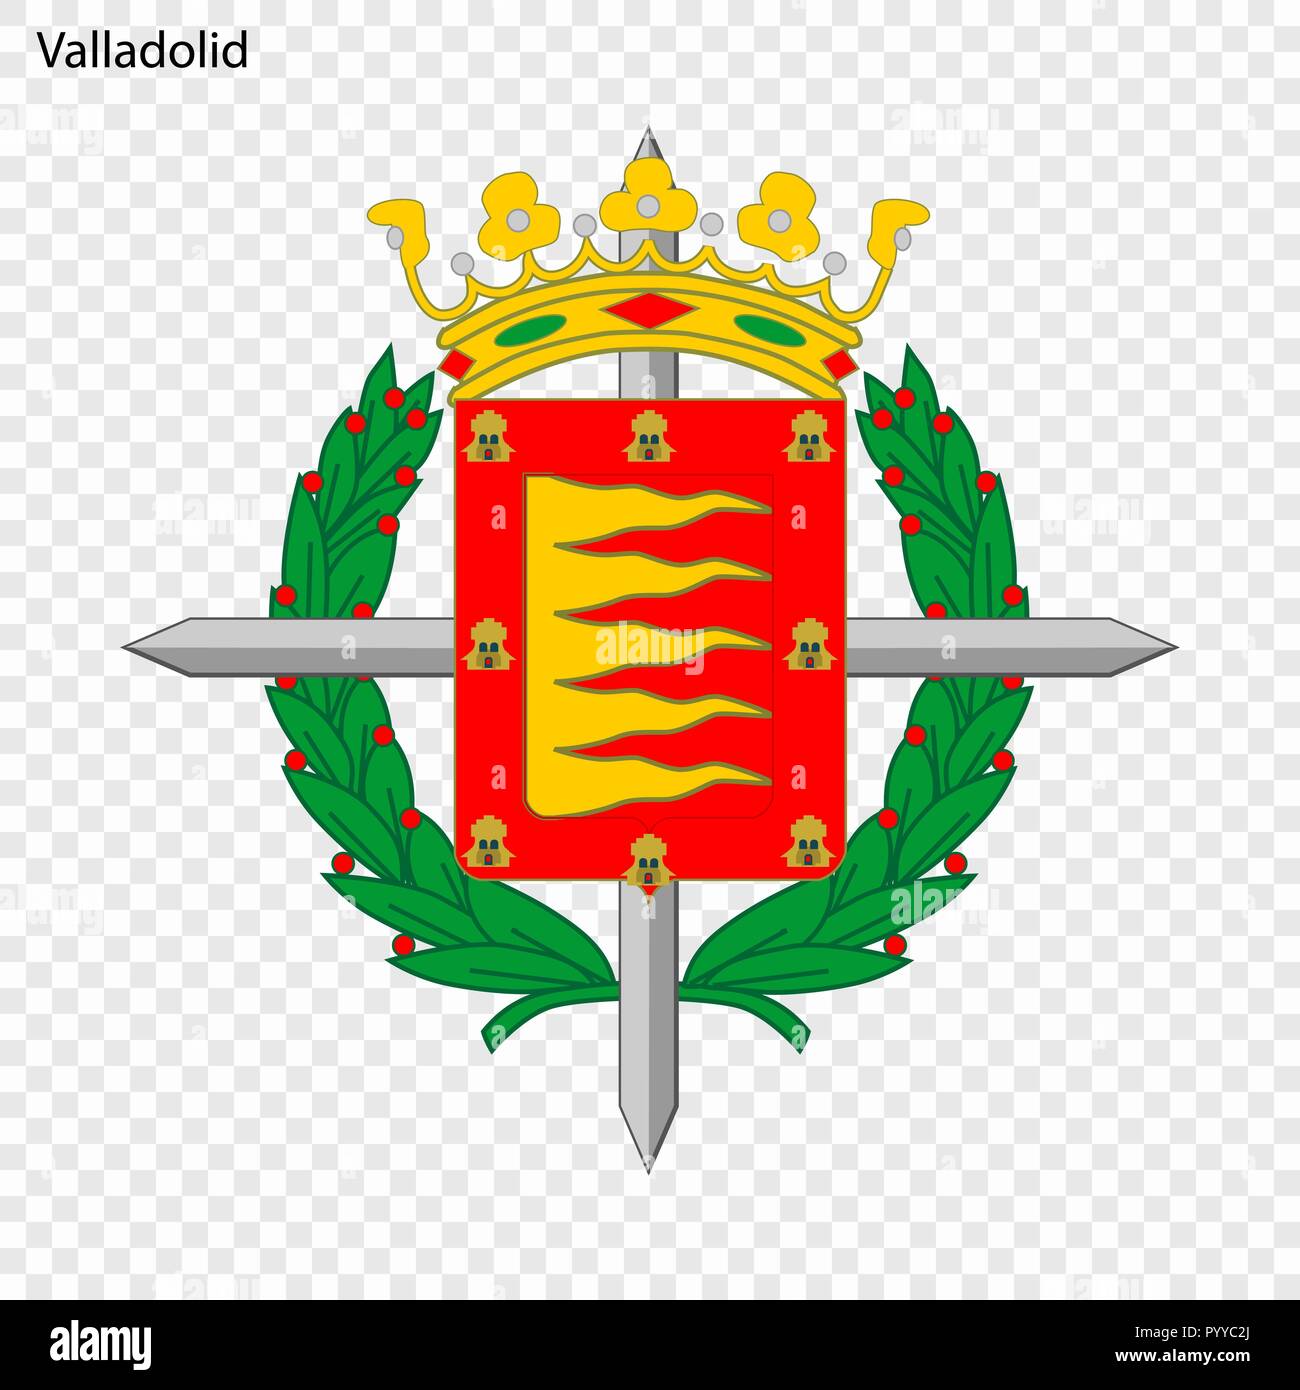 Emblem of Valladolid. City of Spain. Vector illustration Stock Vector